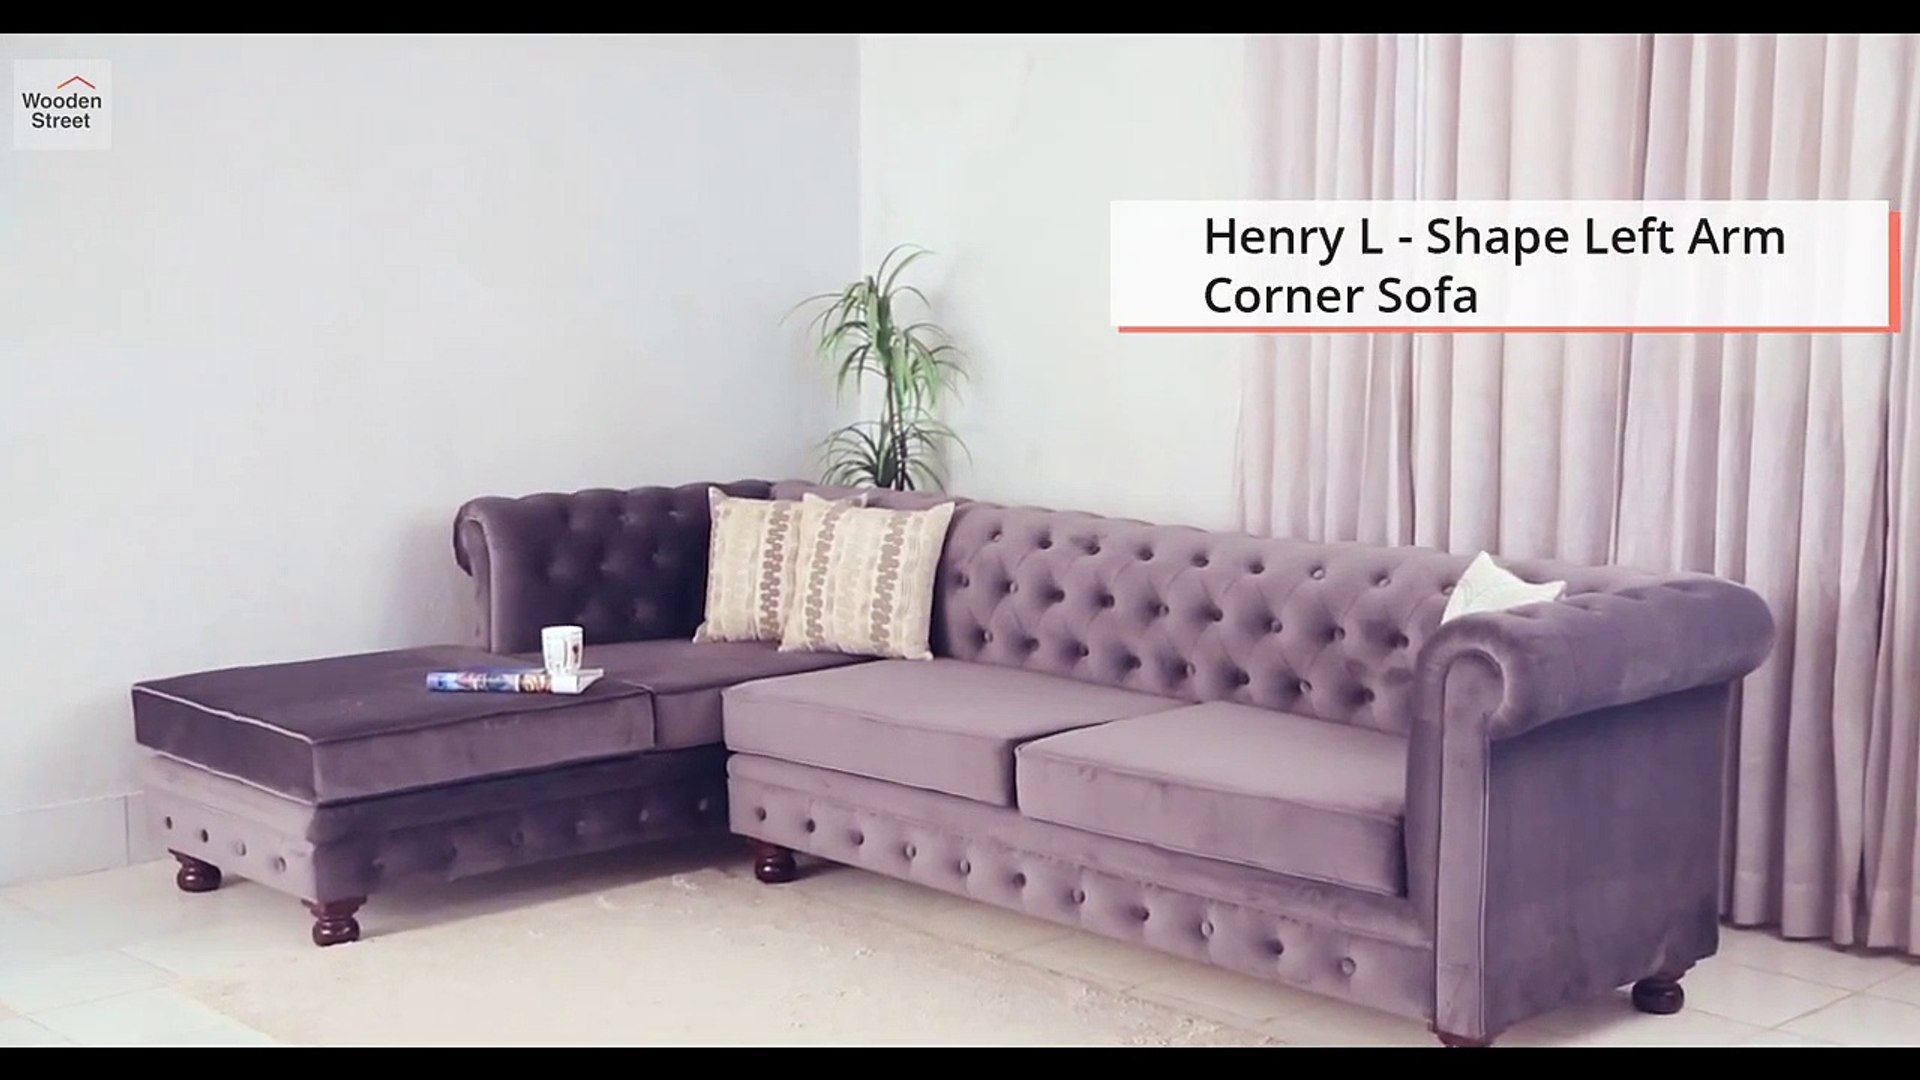 Corner Sofa- Henry L-Shaped Left Arm Corner Sofa Set - Corner Sofa Design  by Wooden Street - video Dailymotion